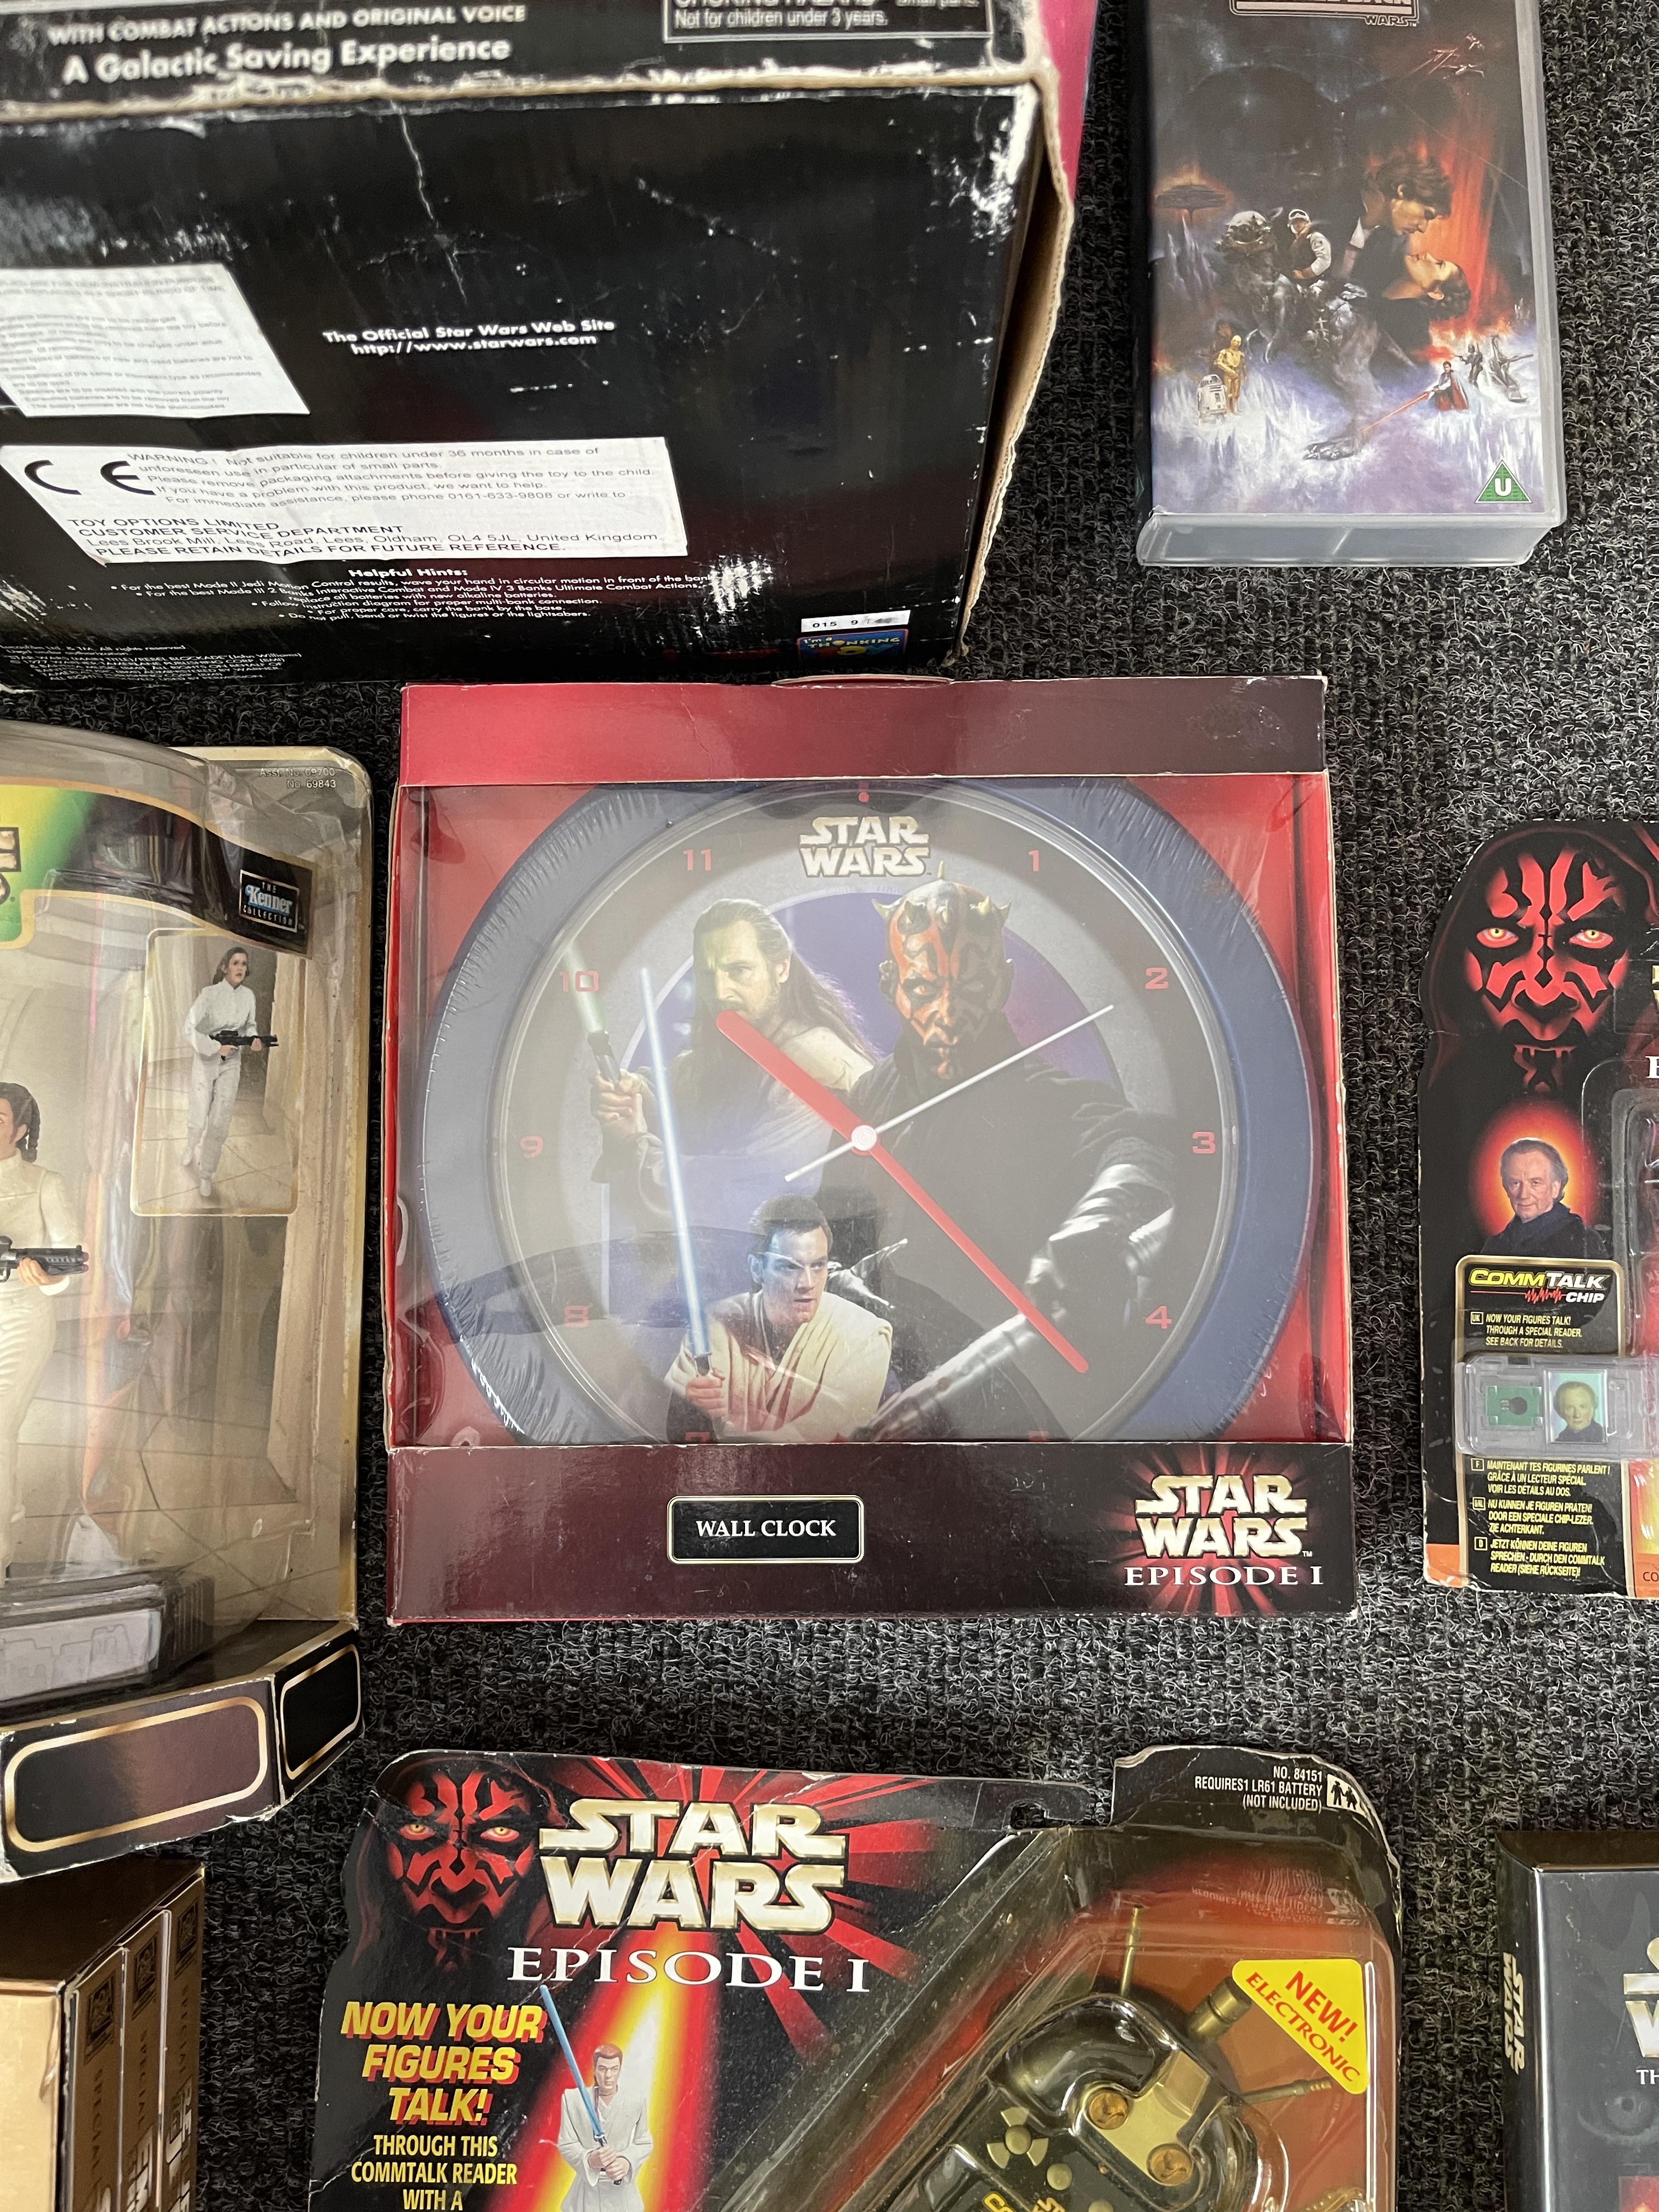 Assortment of Star Wars Memorabilia - Image 5 of 10